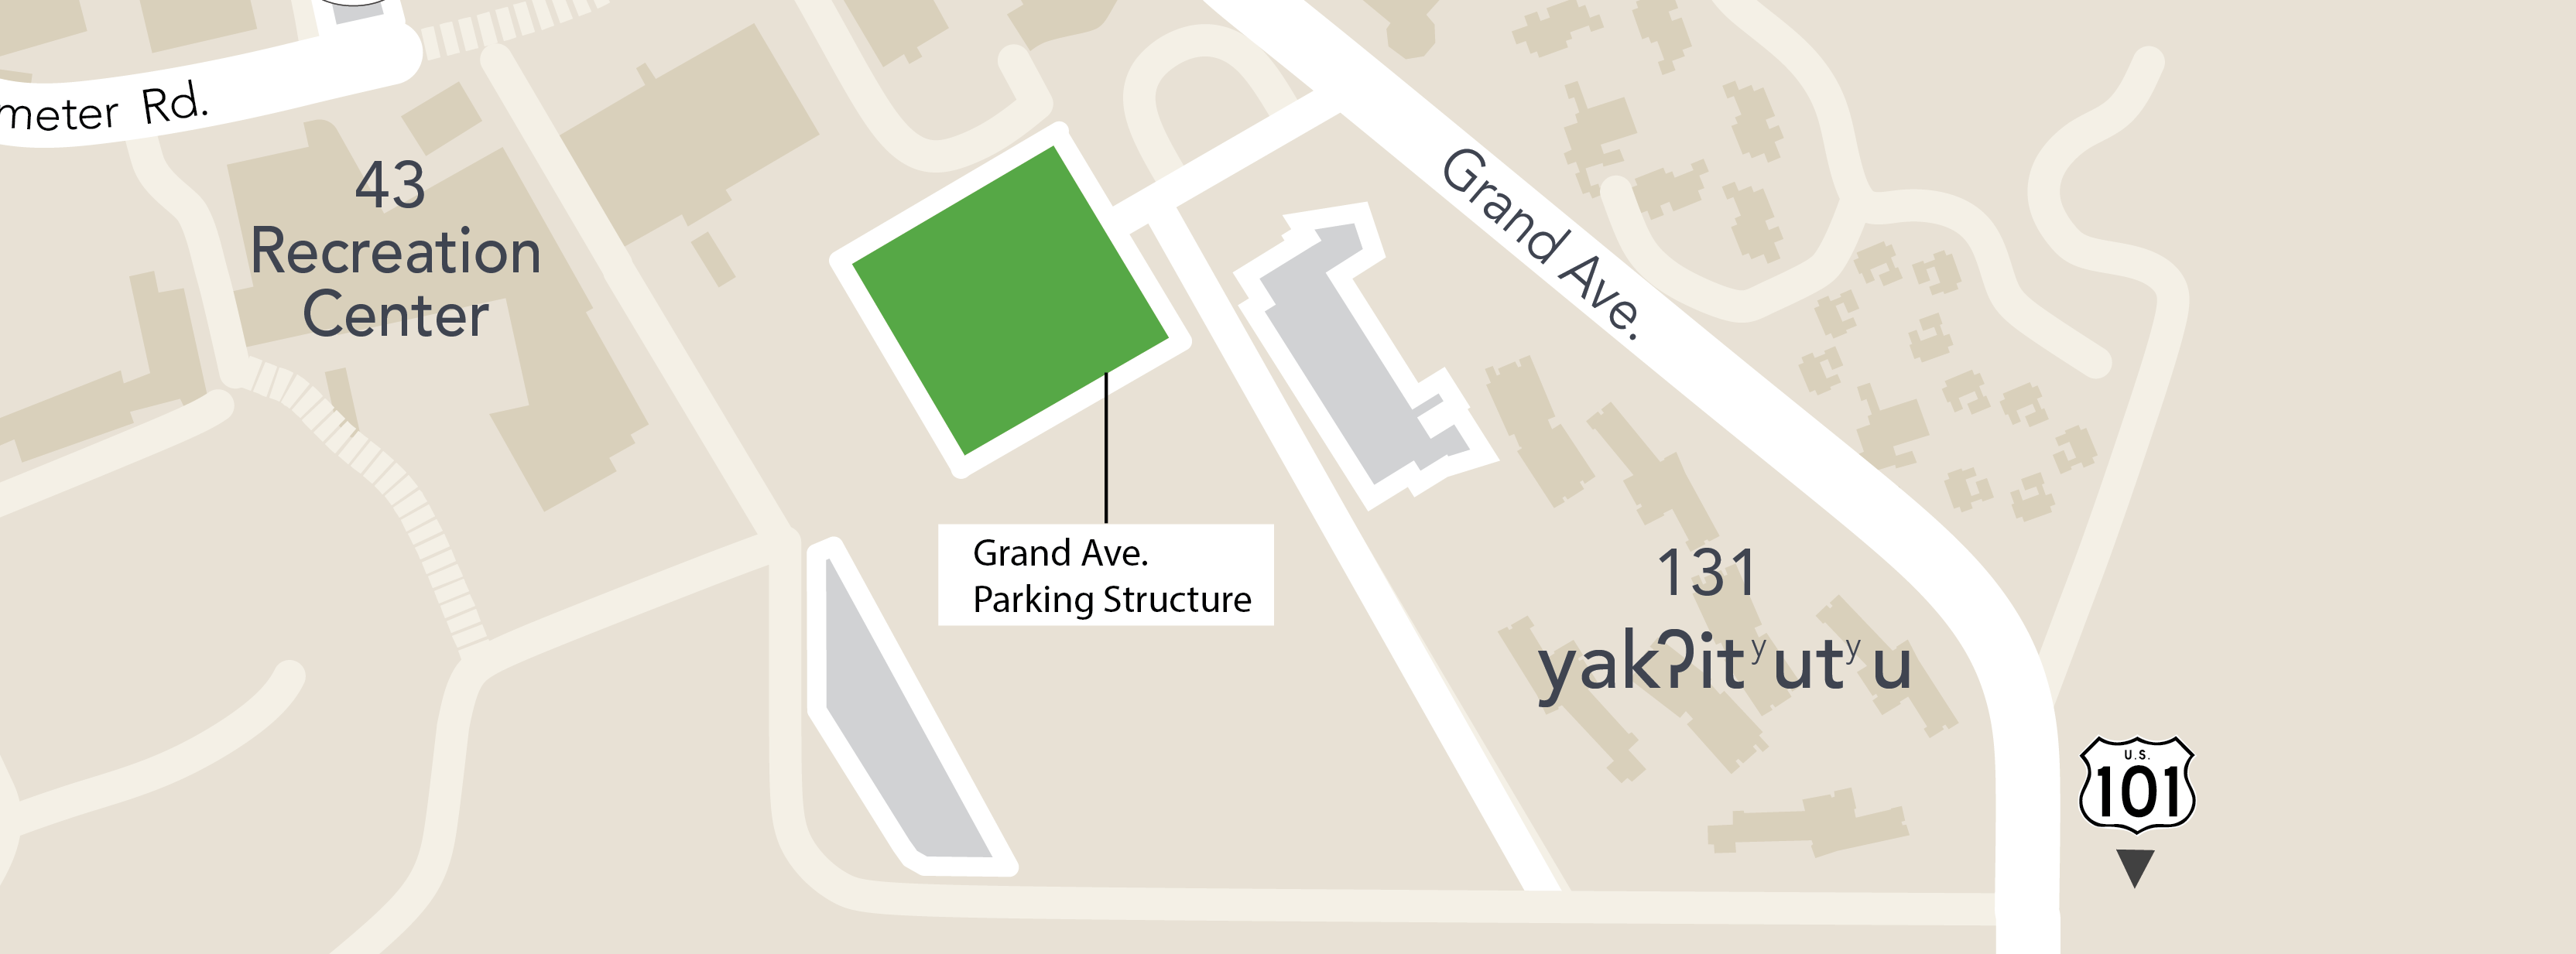 parking Lot G1 map